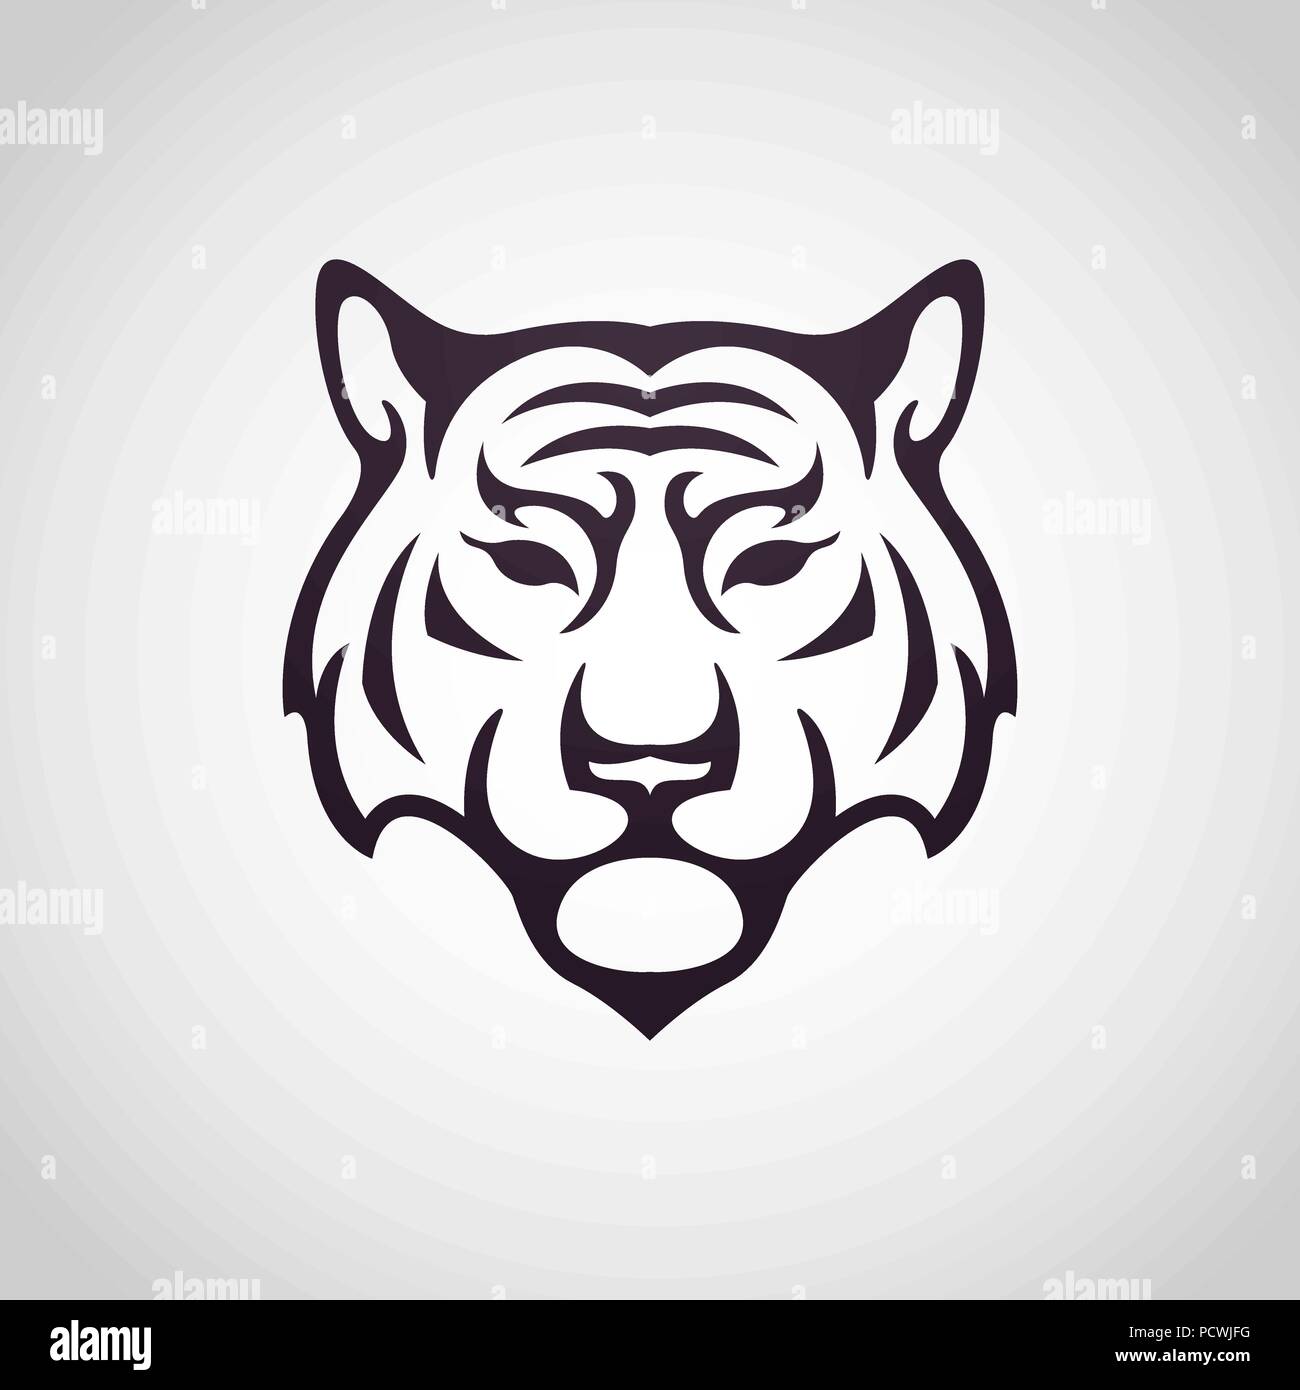 Tiger vector logo icon illustration Stock Vector